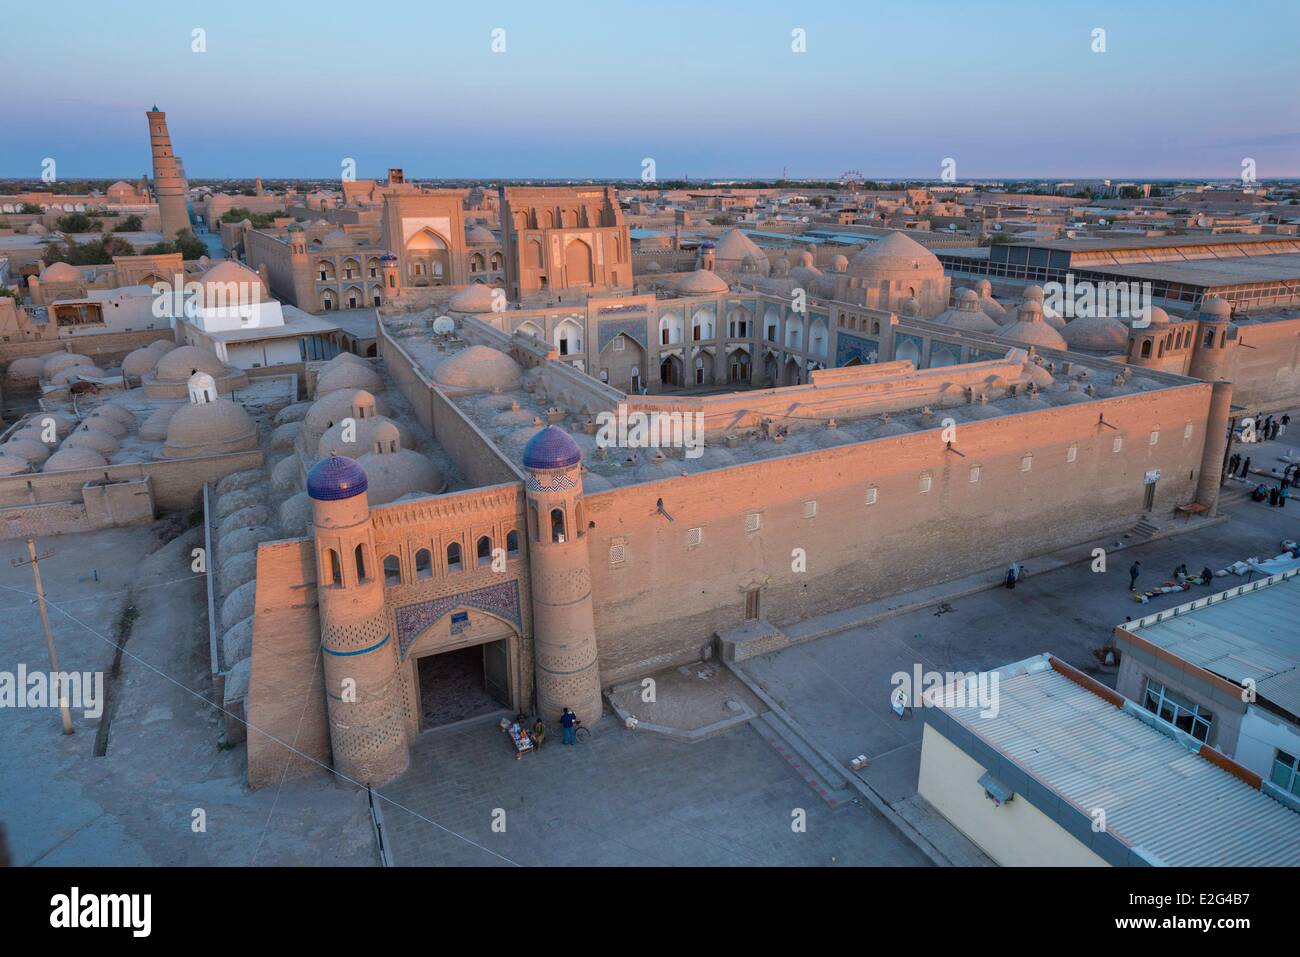 La ruta de la Seda Uzbekistán Khorezm provincia Khiva Itchan Kala ciudad protegido catalogado como patrimonio mundial por la UNESCO, vista de la ciudad y el Islam Foto de stock